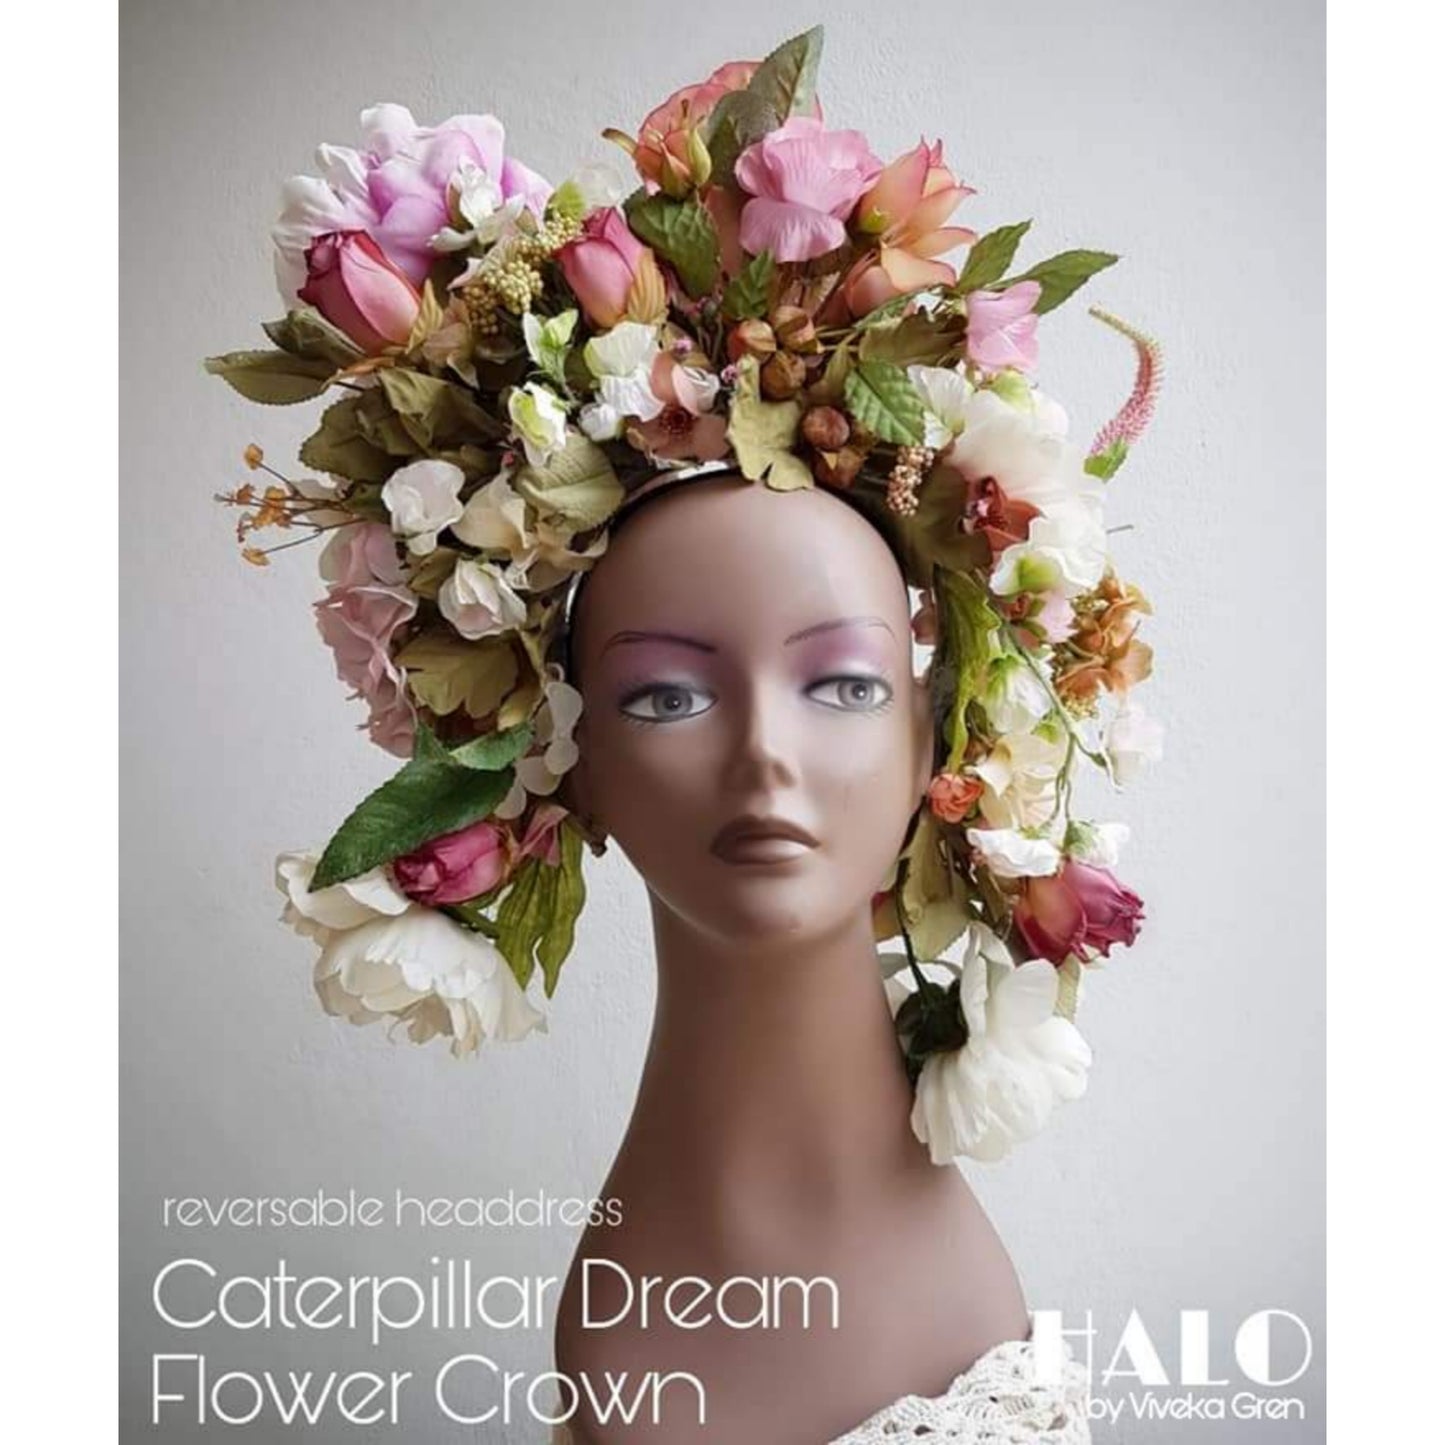 The Caterpillar Dreams Flower Crown